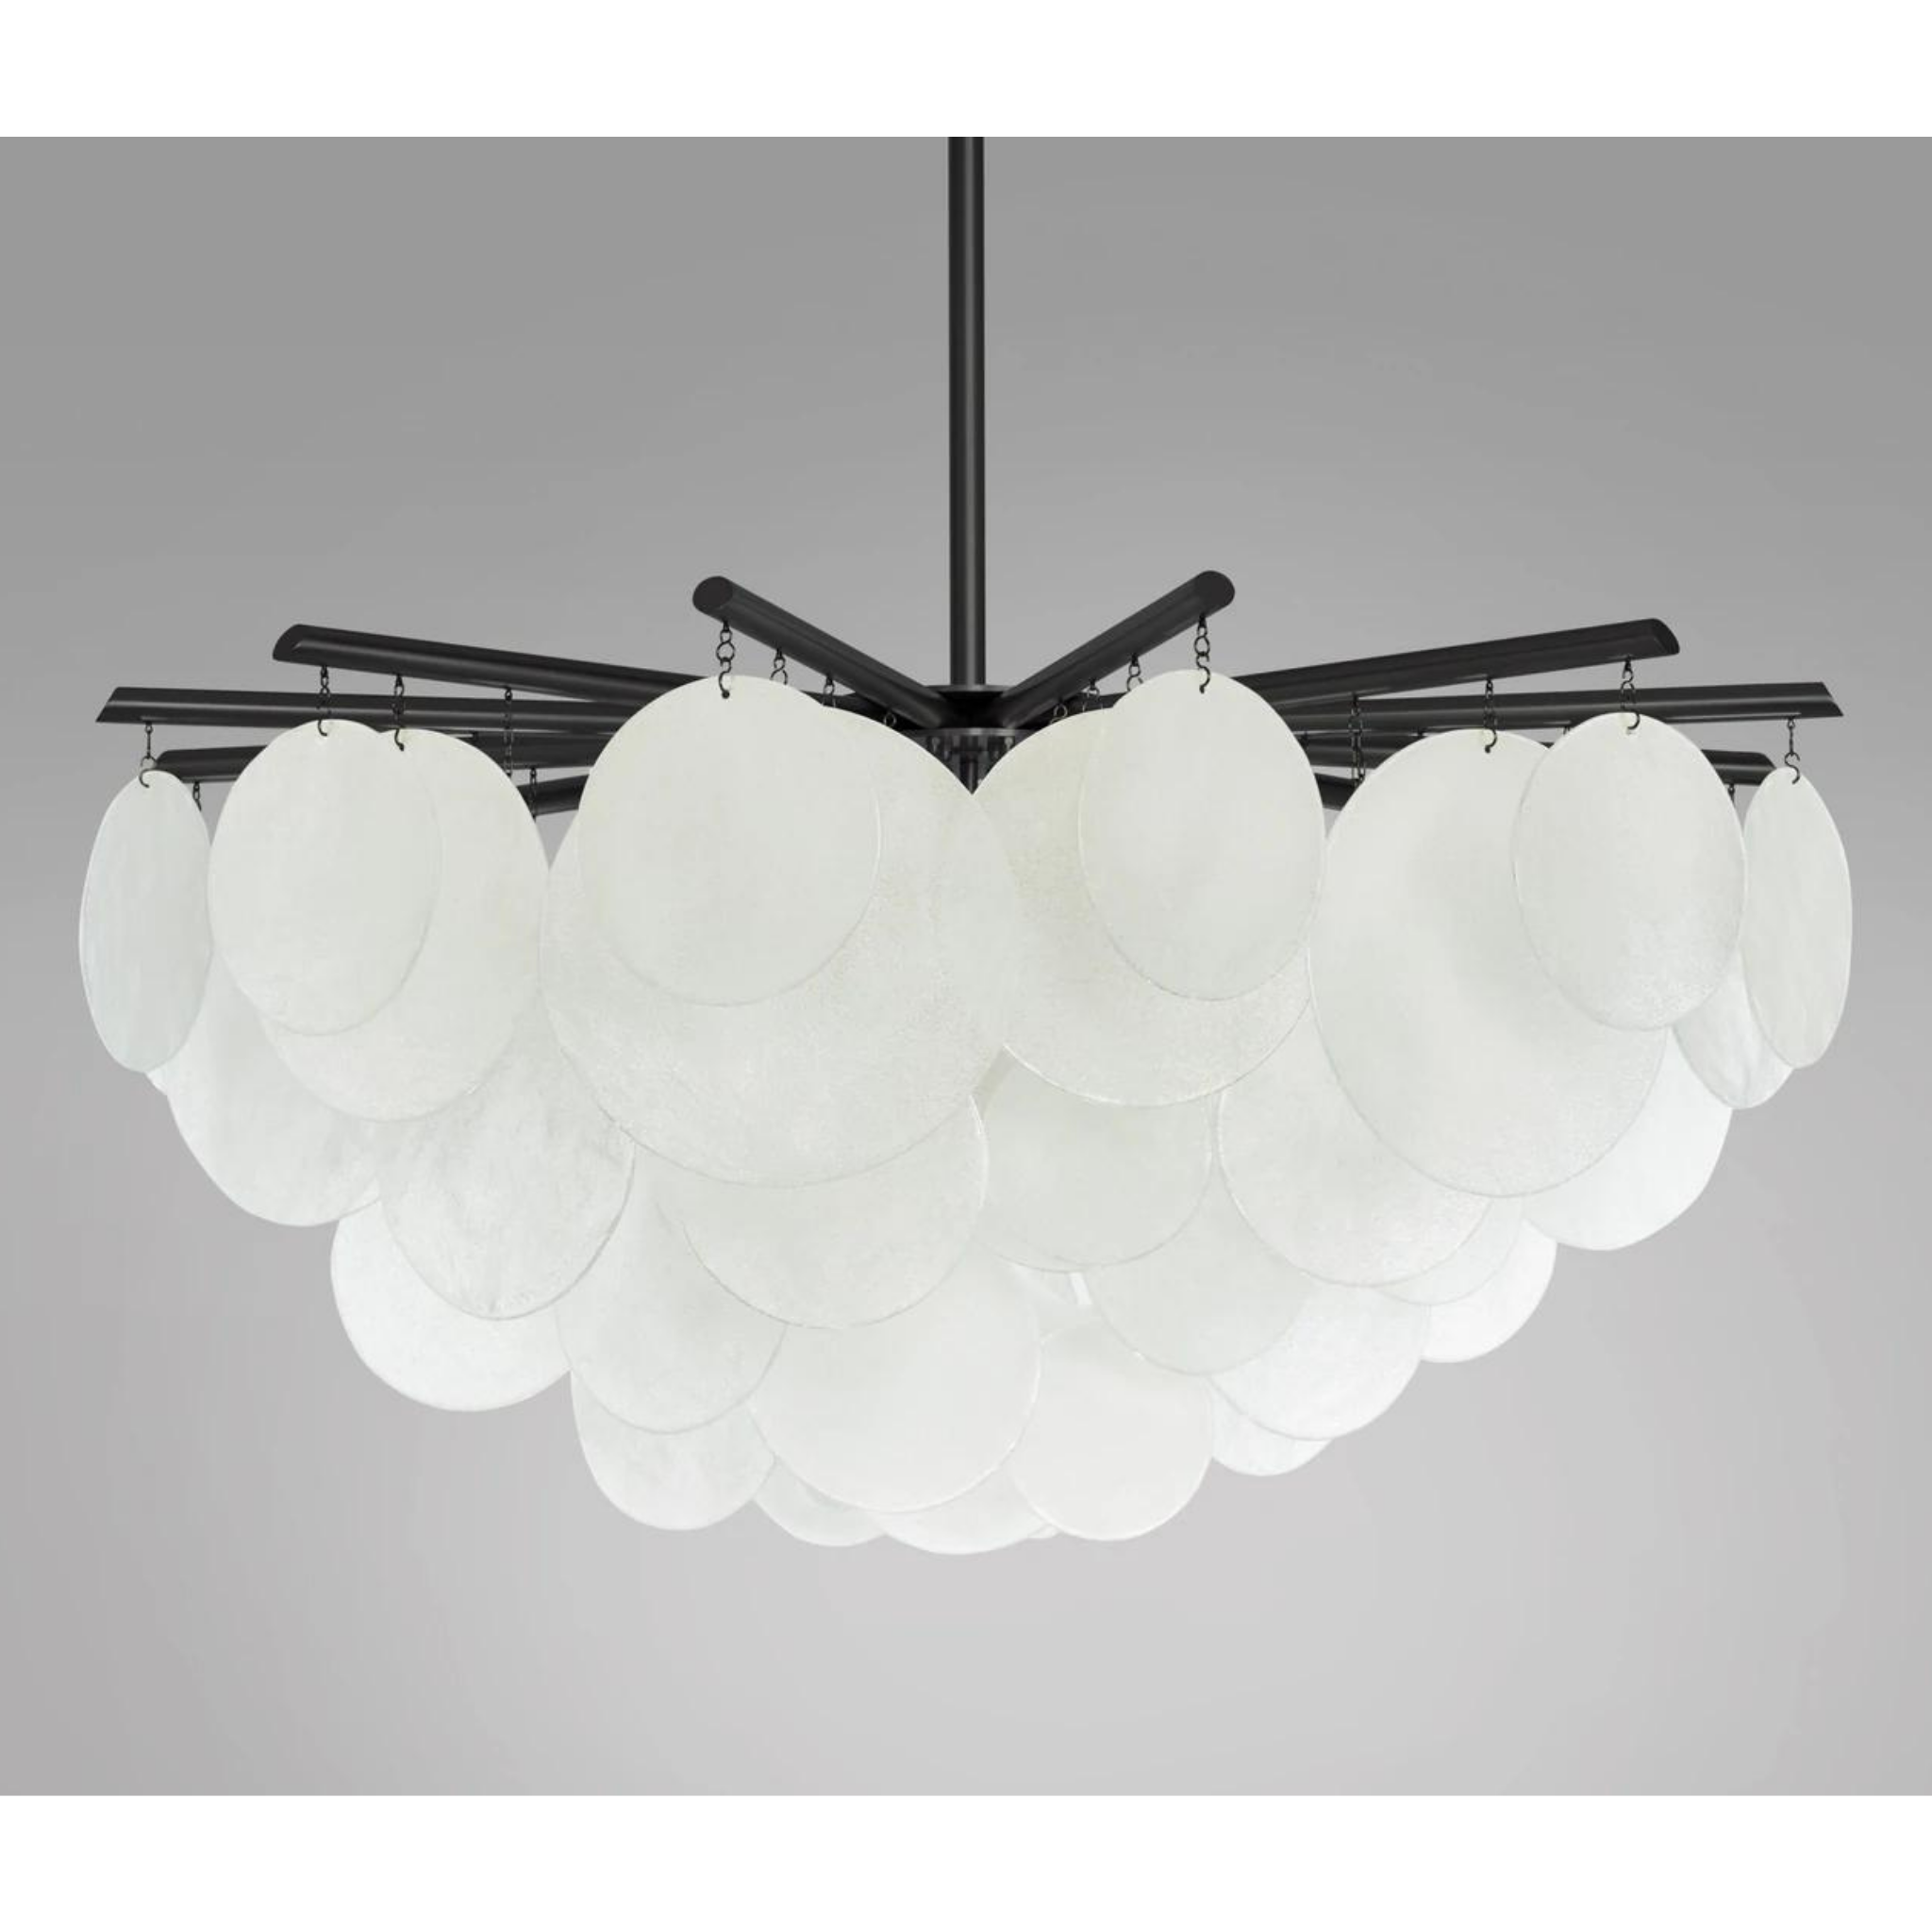 NIMBUS ROUND MODERN CHANDELIER LARGE - CTO LIGHTING | Modern Furniture + Decor